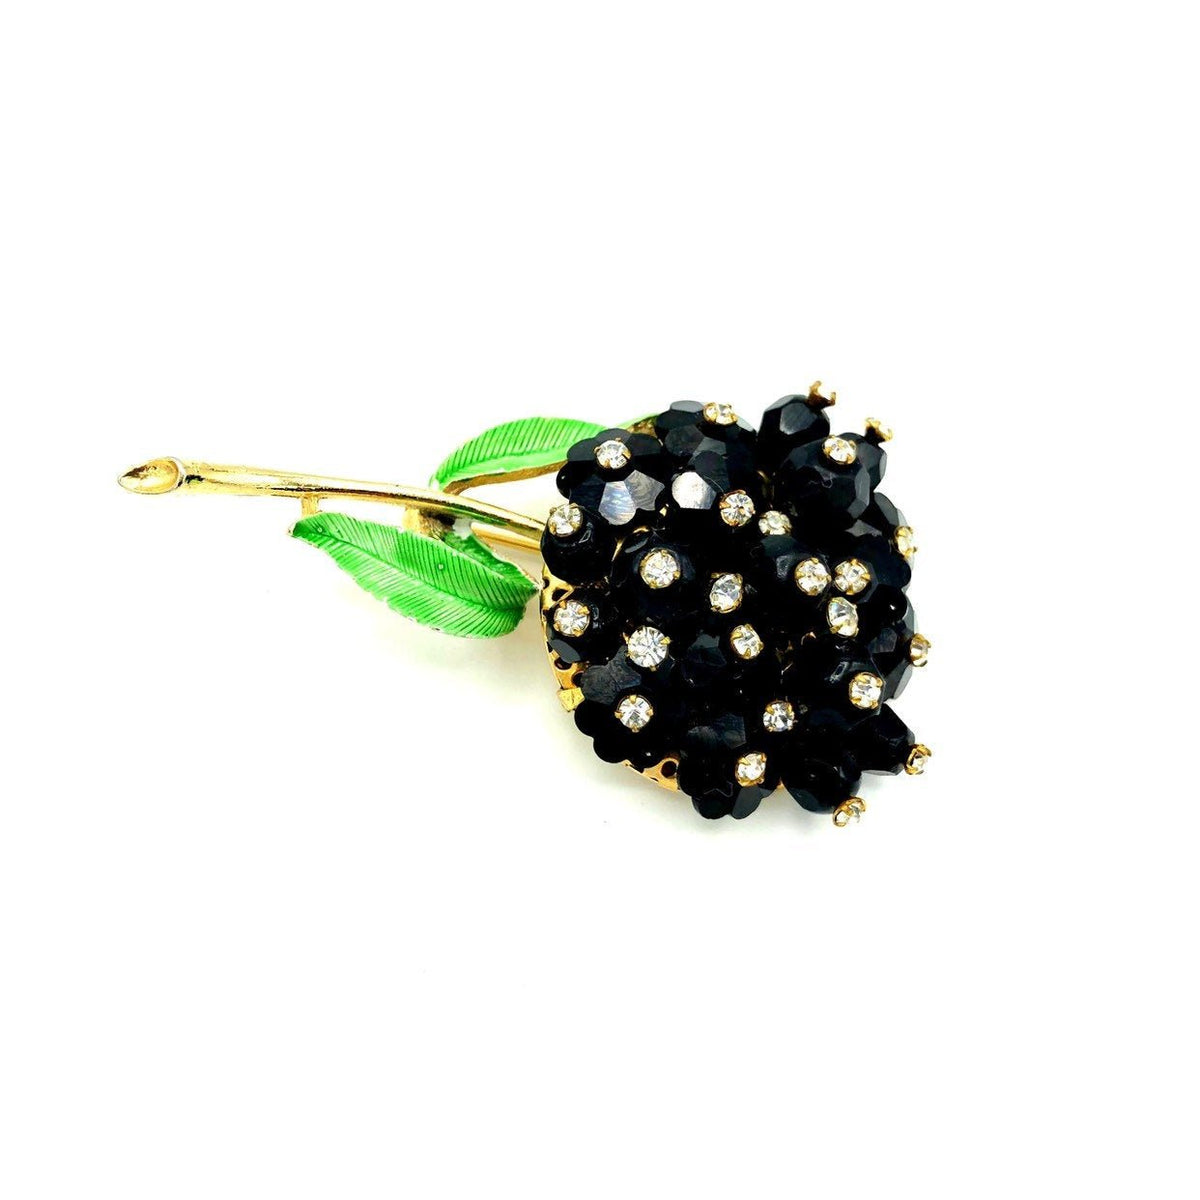 Long Stem Flower Black & White Rhinestone Vintage Brooch - 24 Wishes Vintage Jewelry